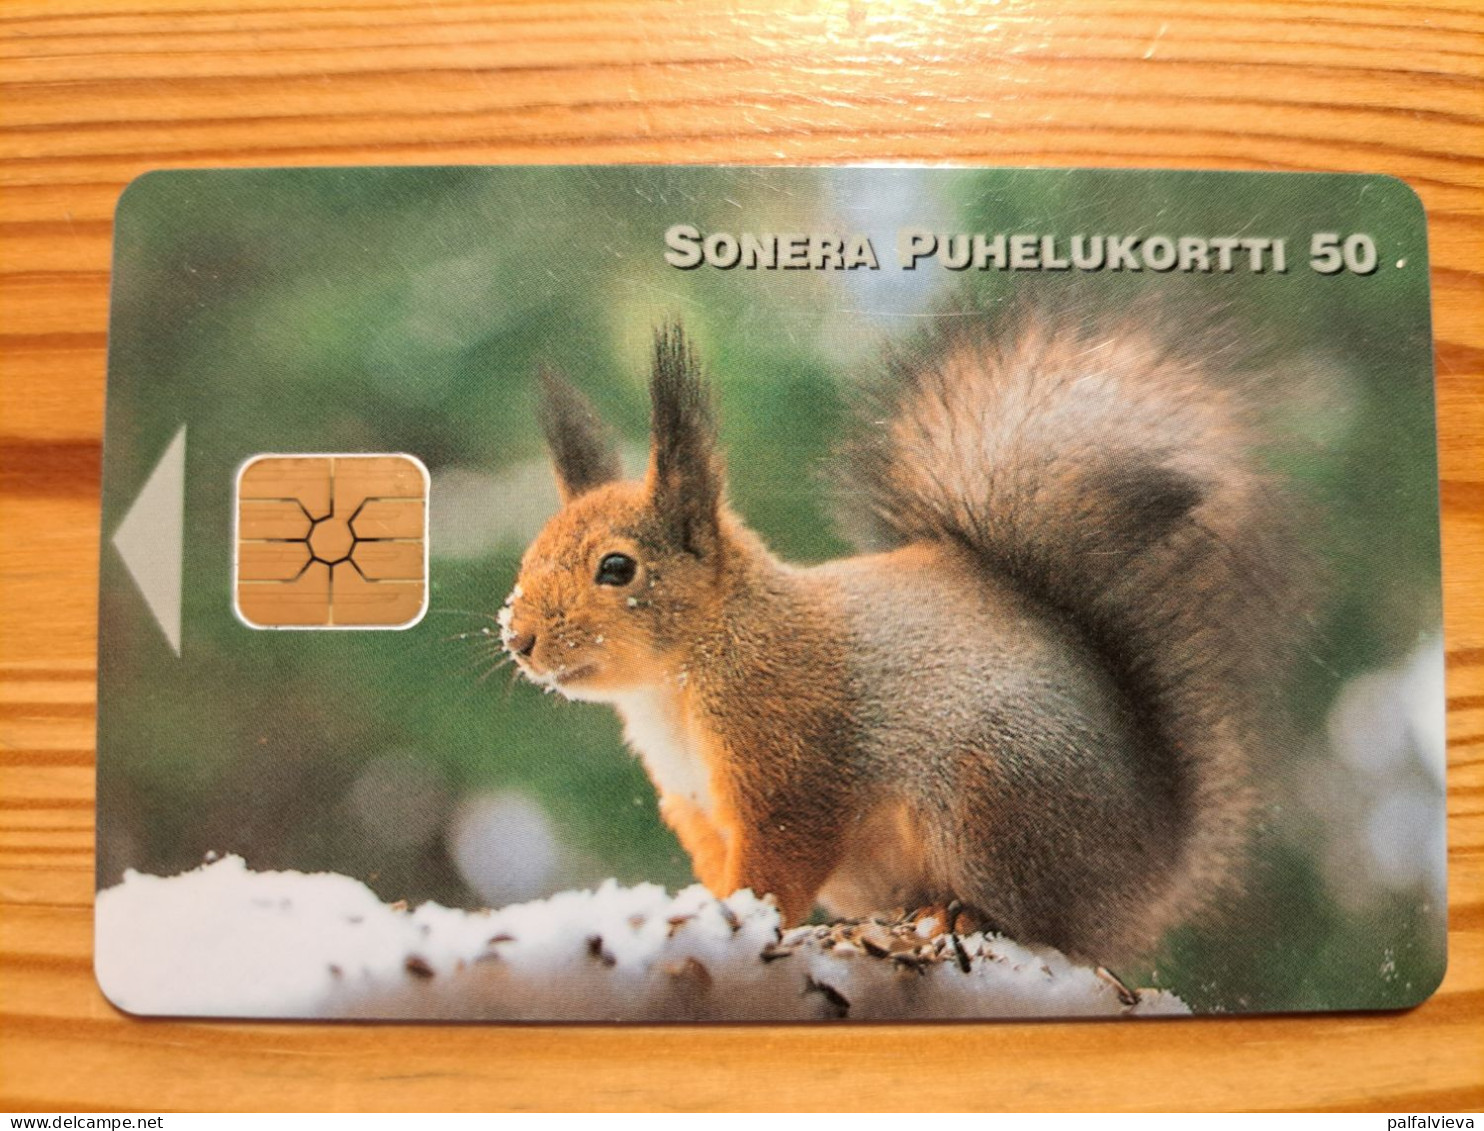 Phonecard Finland - Squirrel - Finlandia